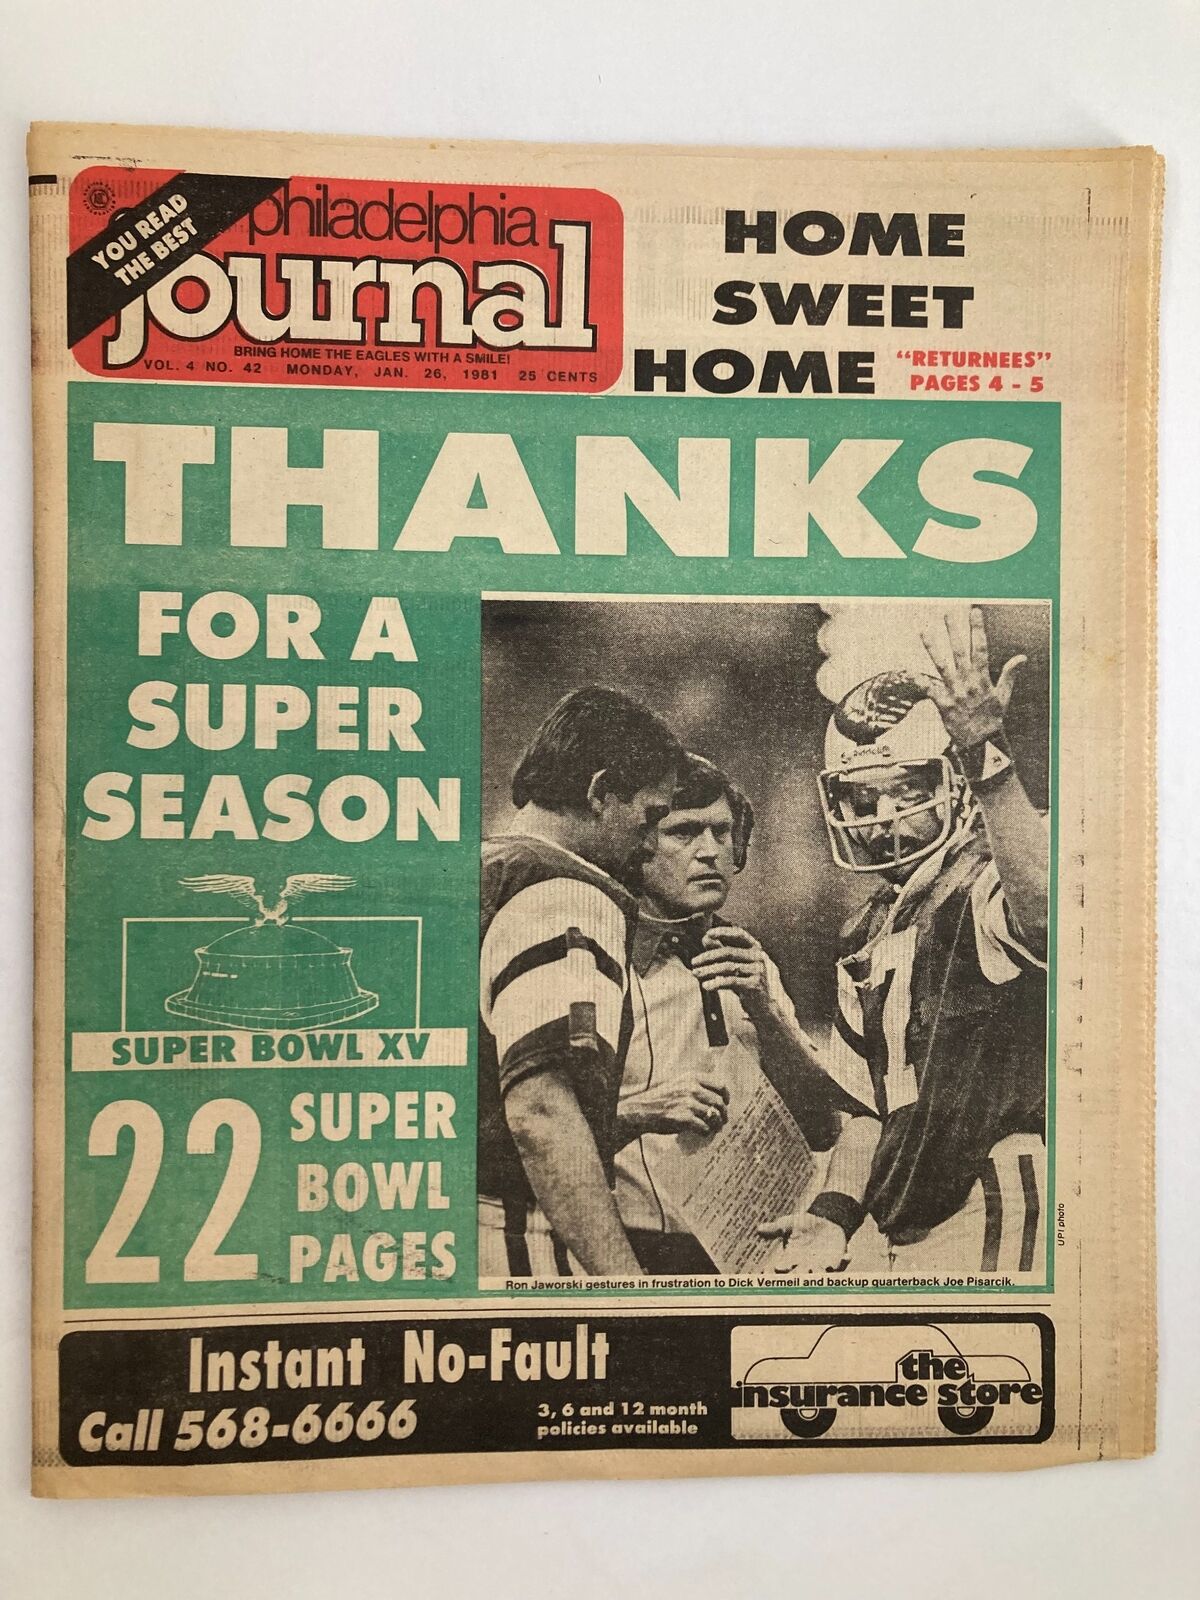 Philadelphia Journal Tabloid January 26 1981 Vol 4 #42 NFL Eagles Ron Jaworski